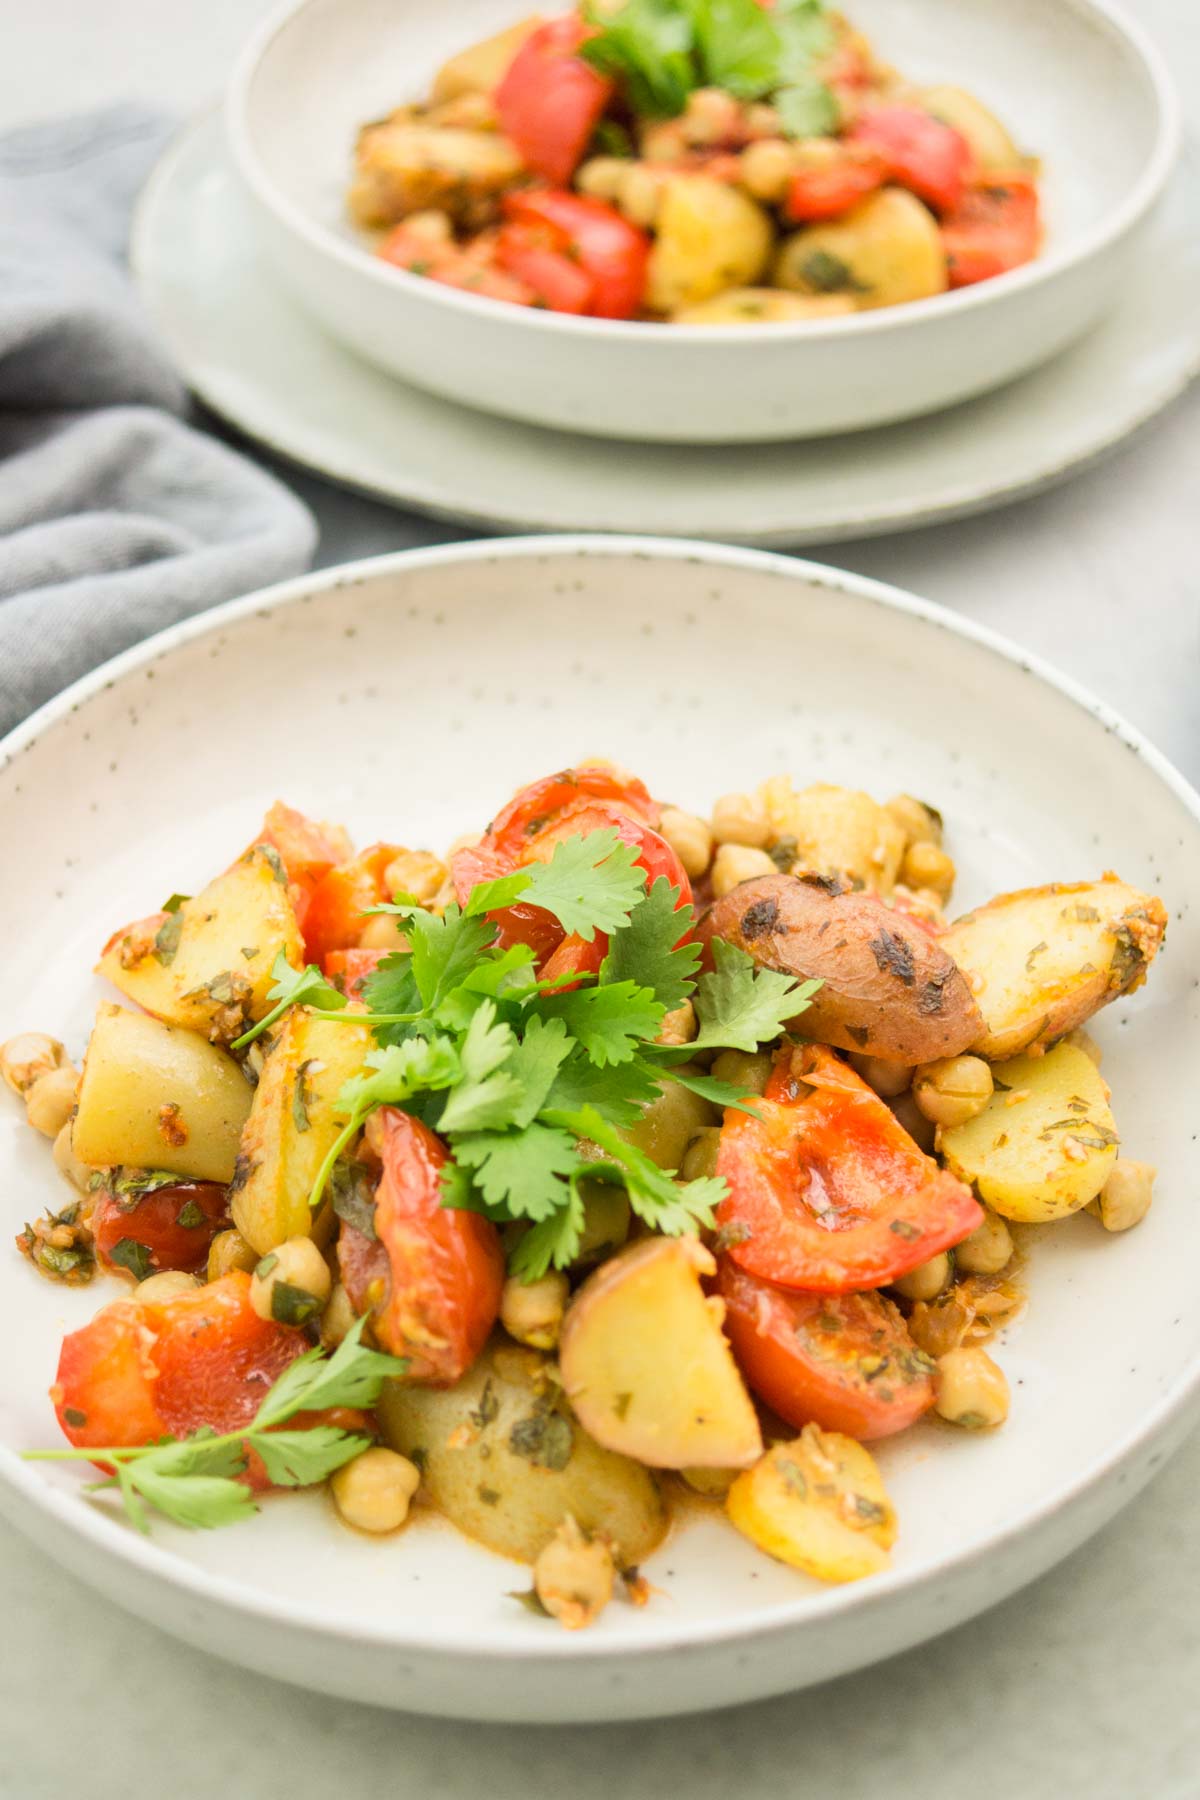 würziges Kartoffel-Tajine mit Kichererbsen, Tomaten, roter Paprika und Petersilie Rezept